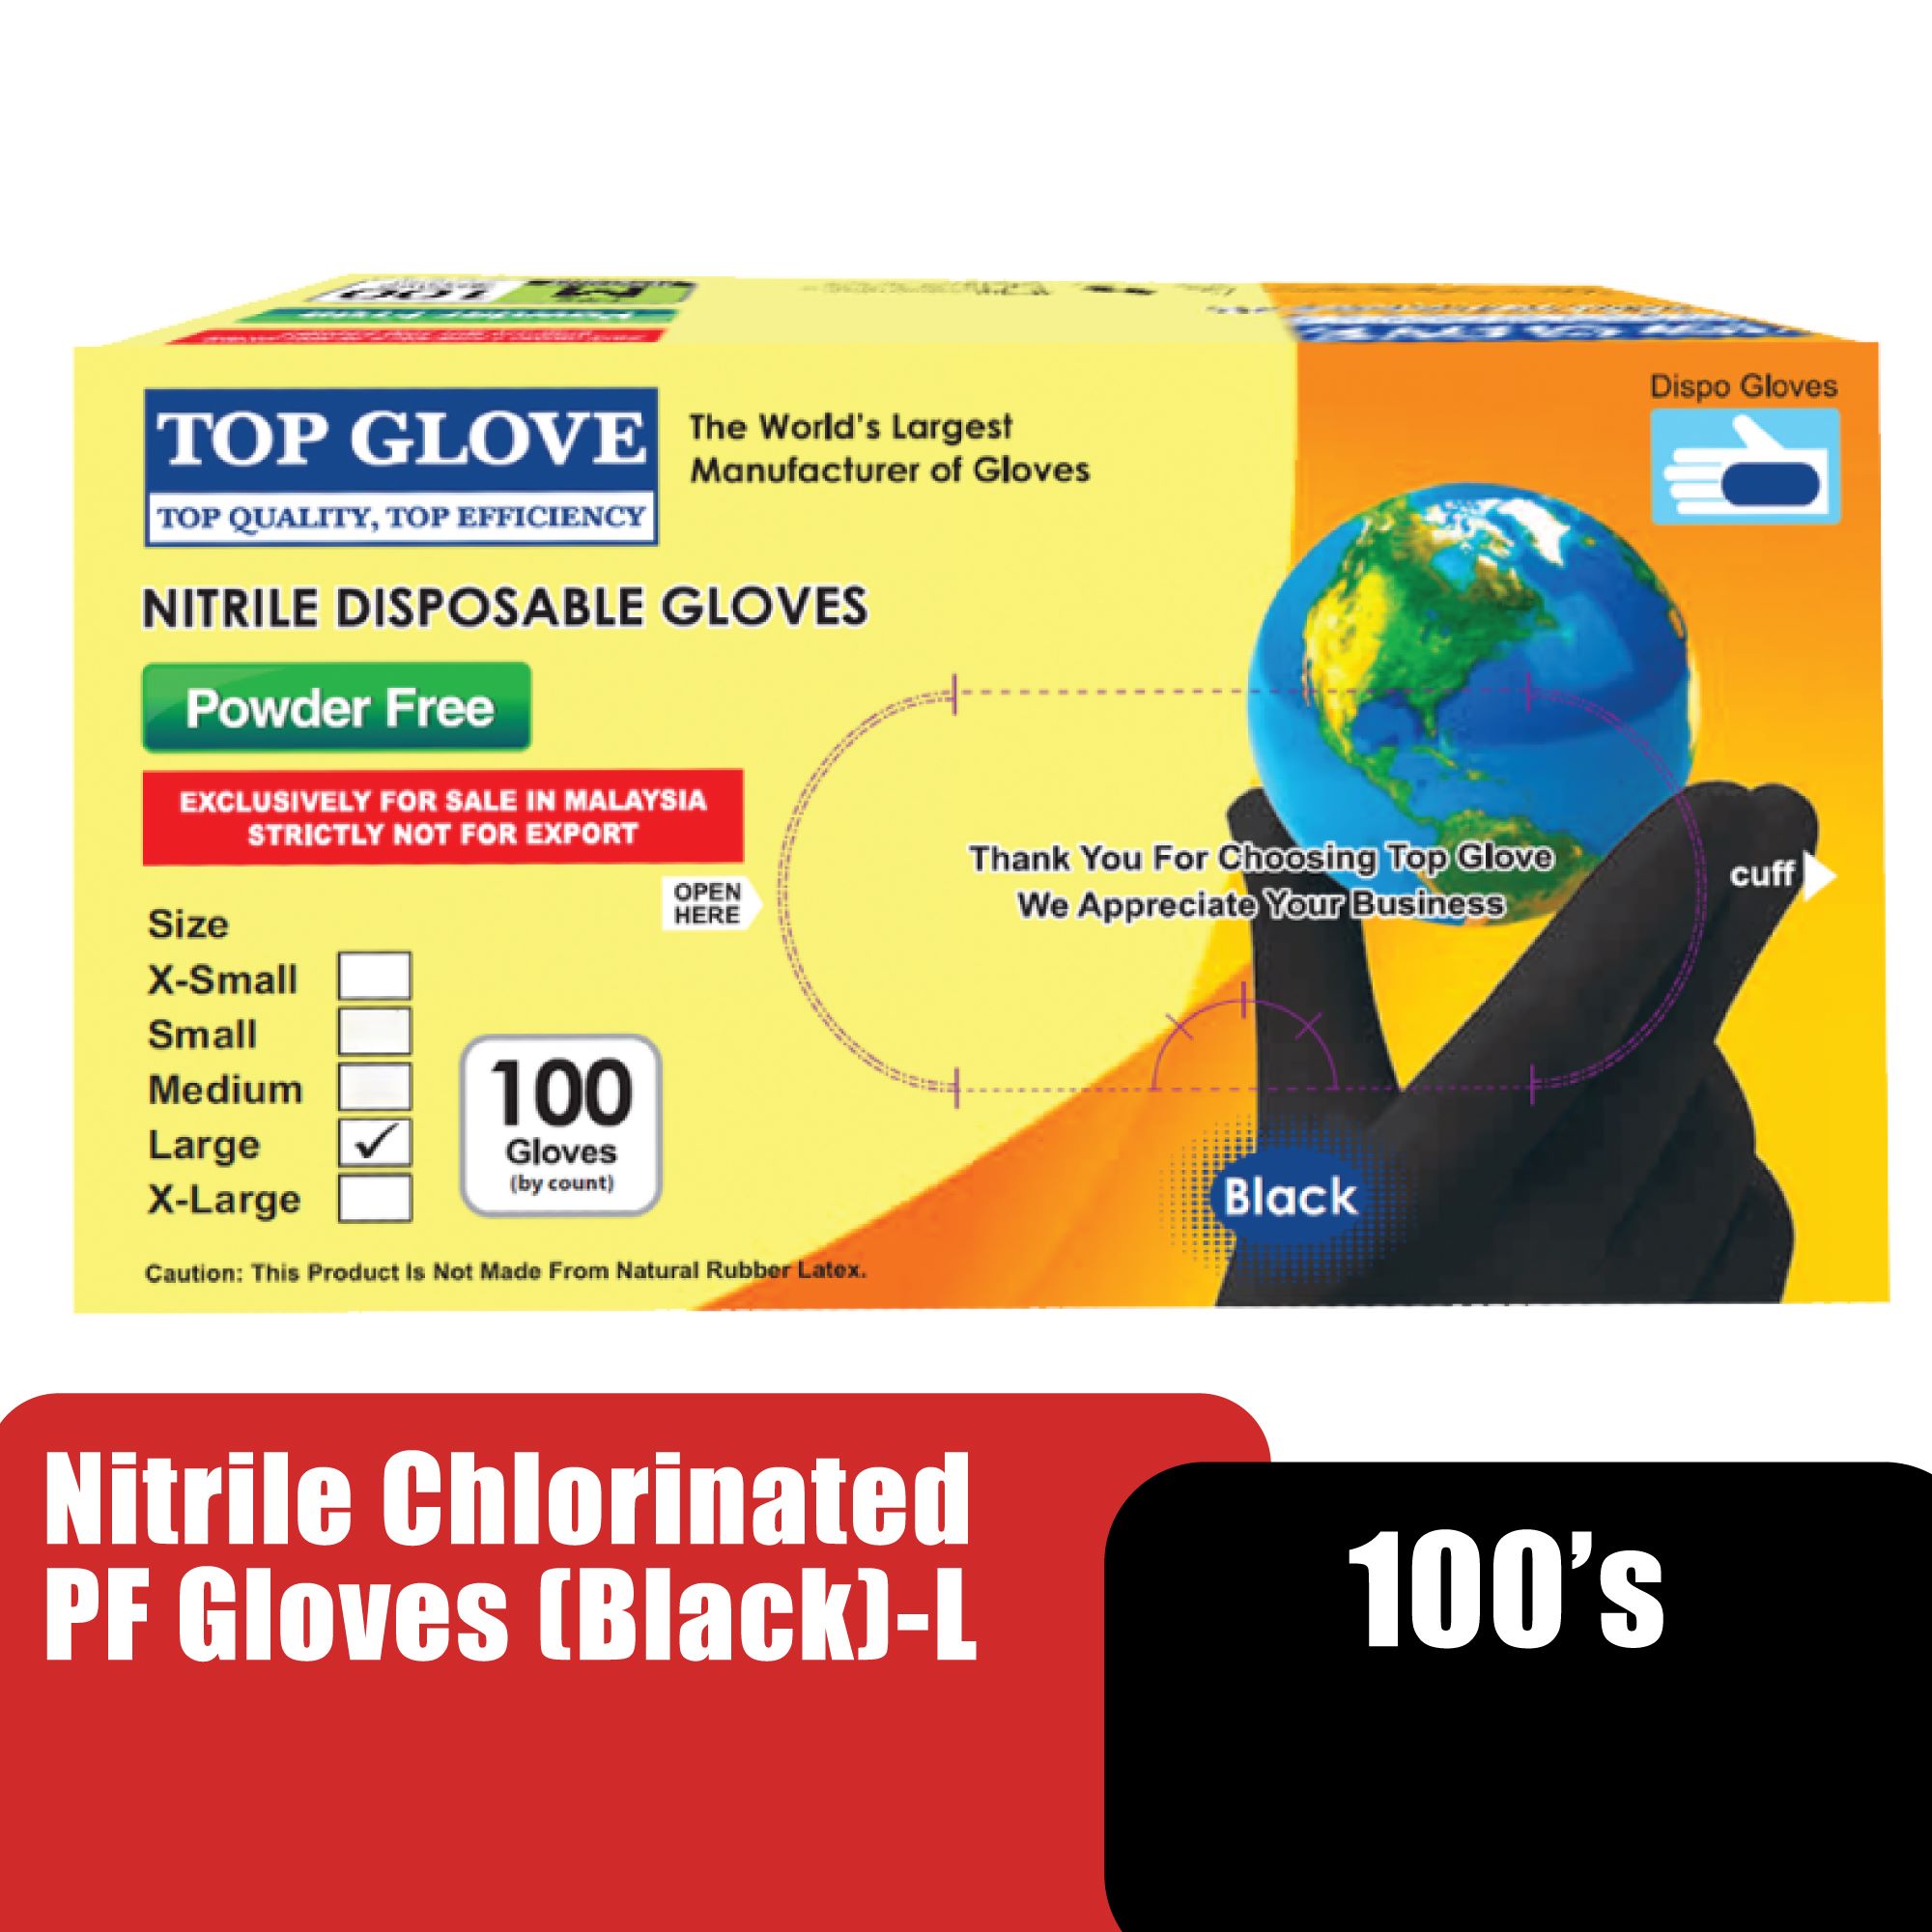 TOP GLOVE NITRILE CHLORINATED PF GLOVES (BLACK) 100'S - L